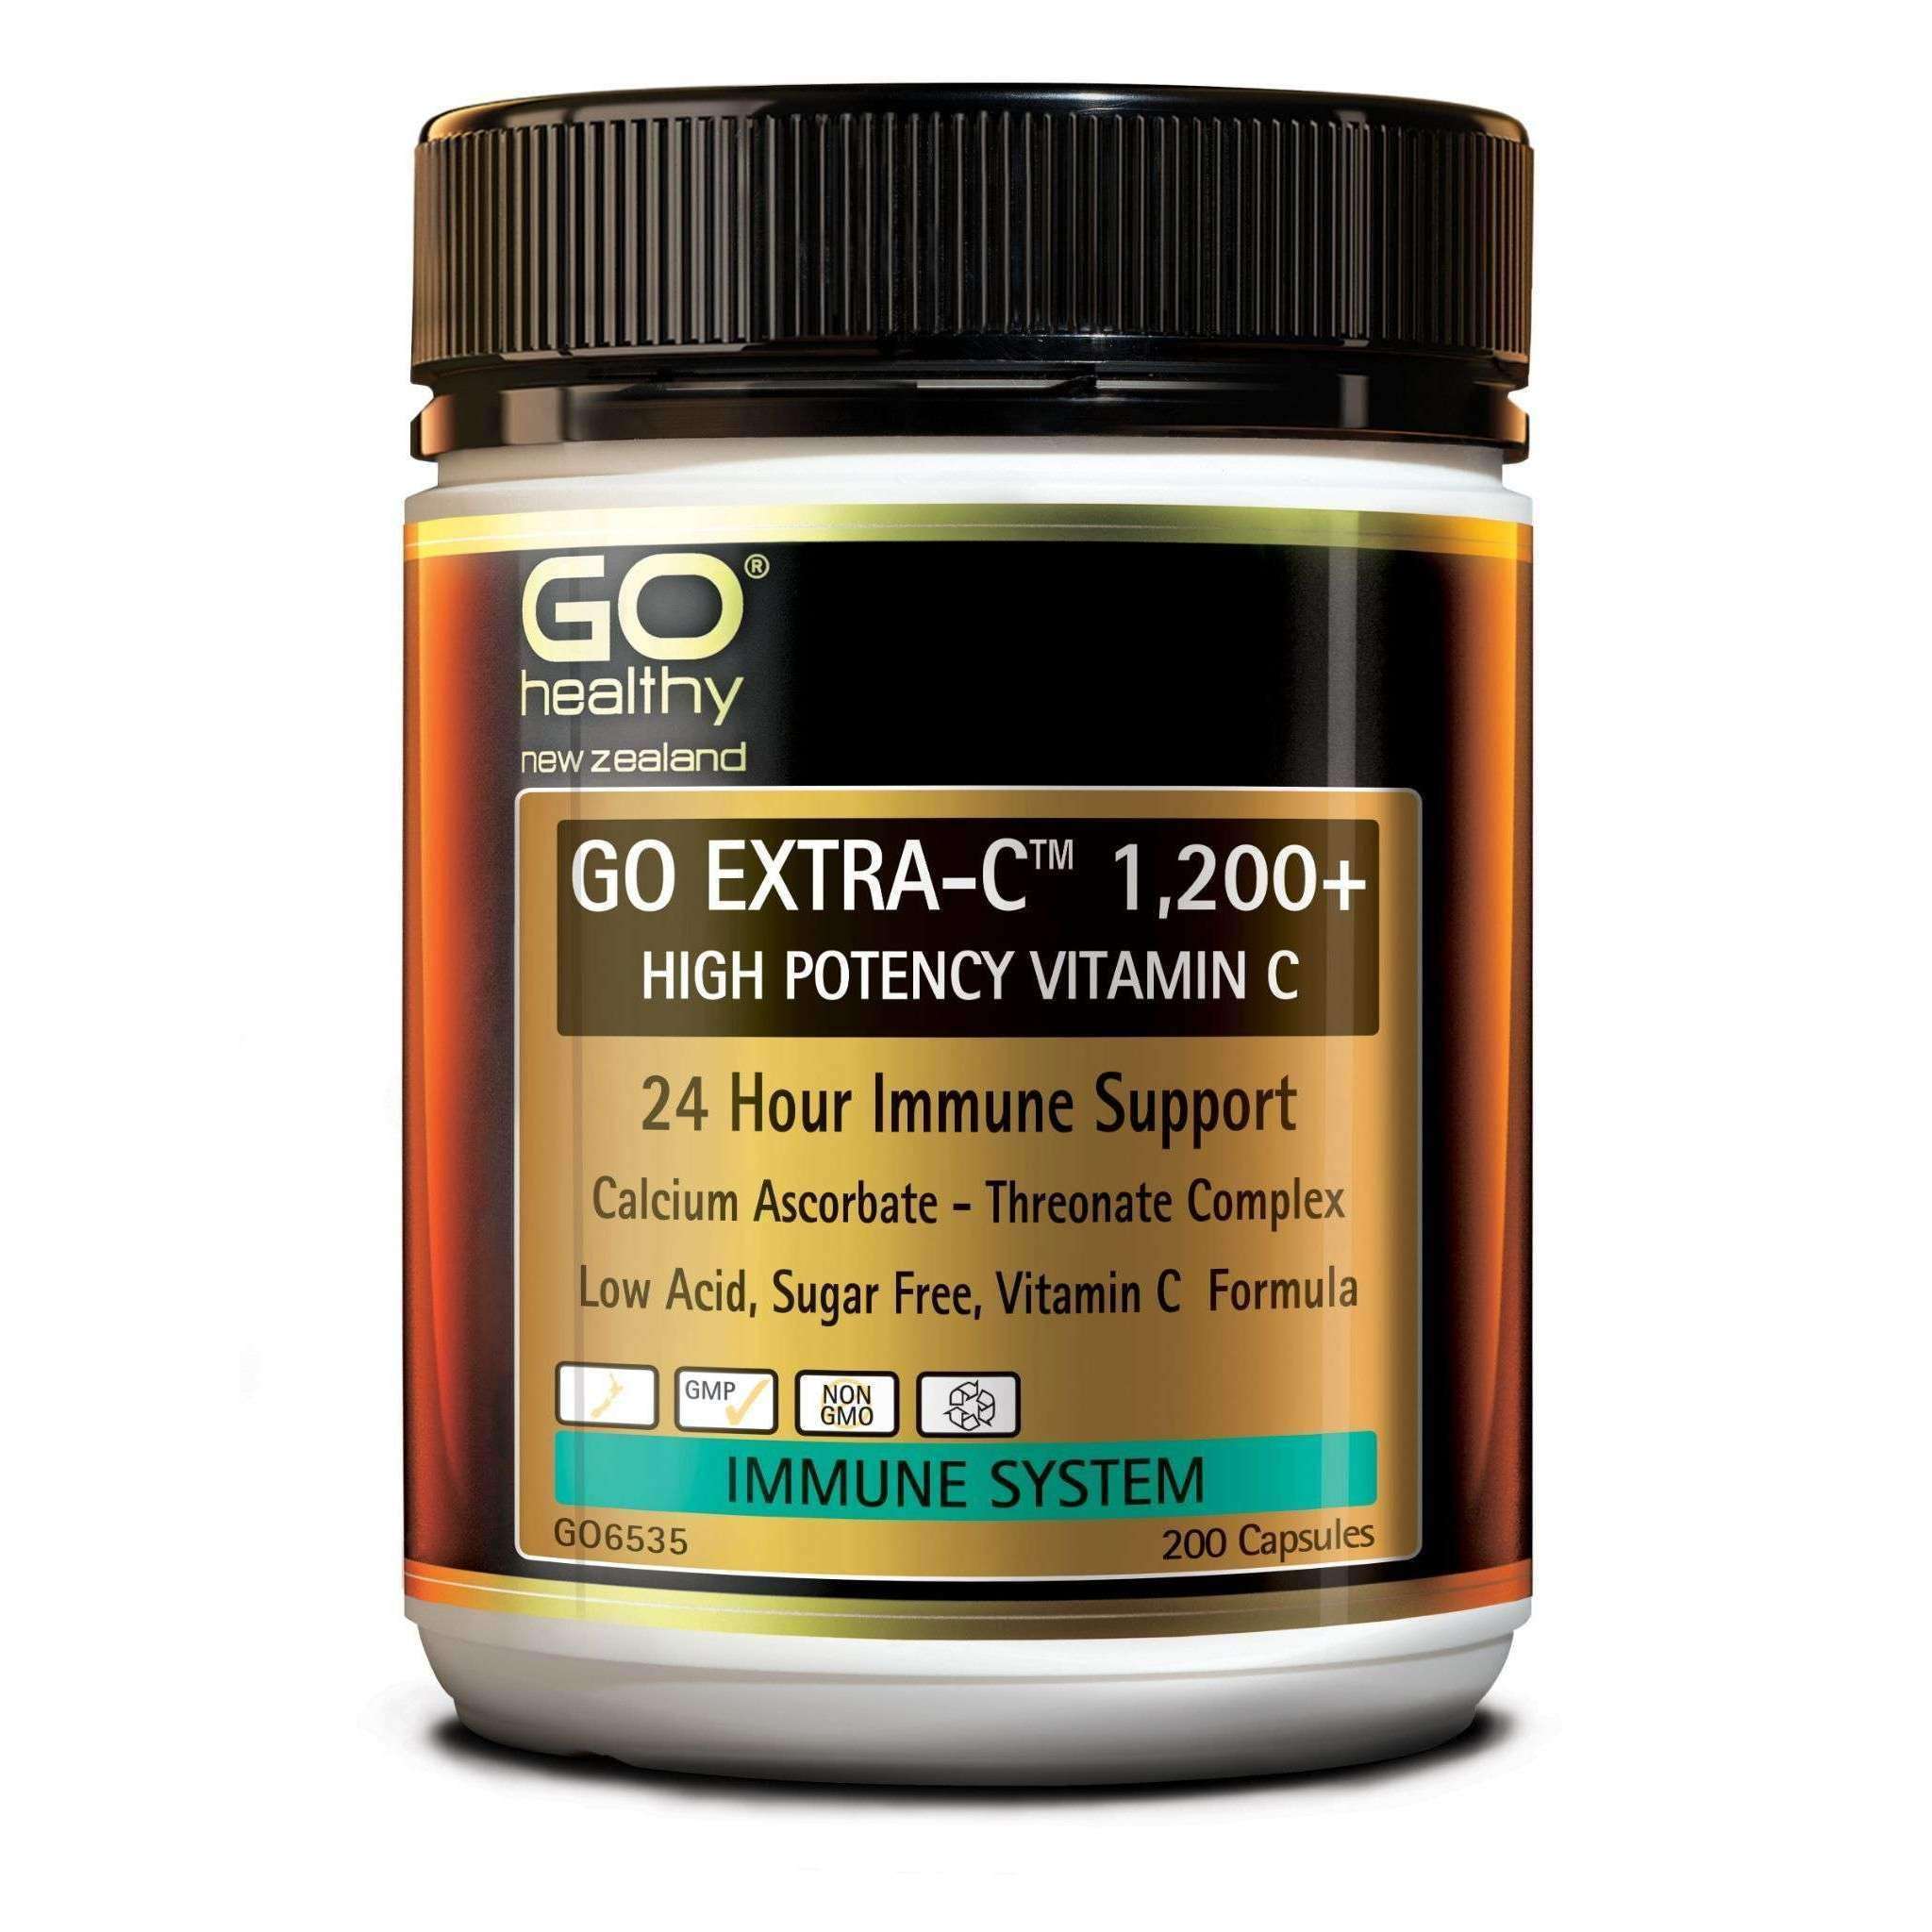 Go Healthy Go Extra-C 1,200+